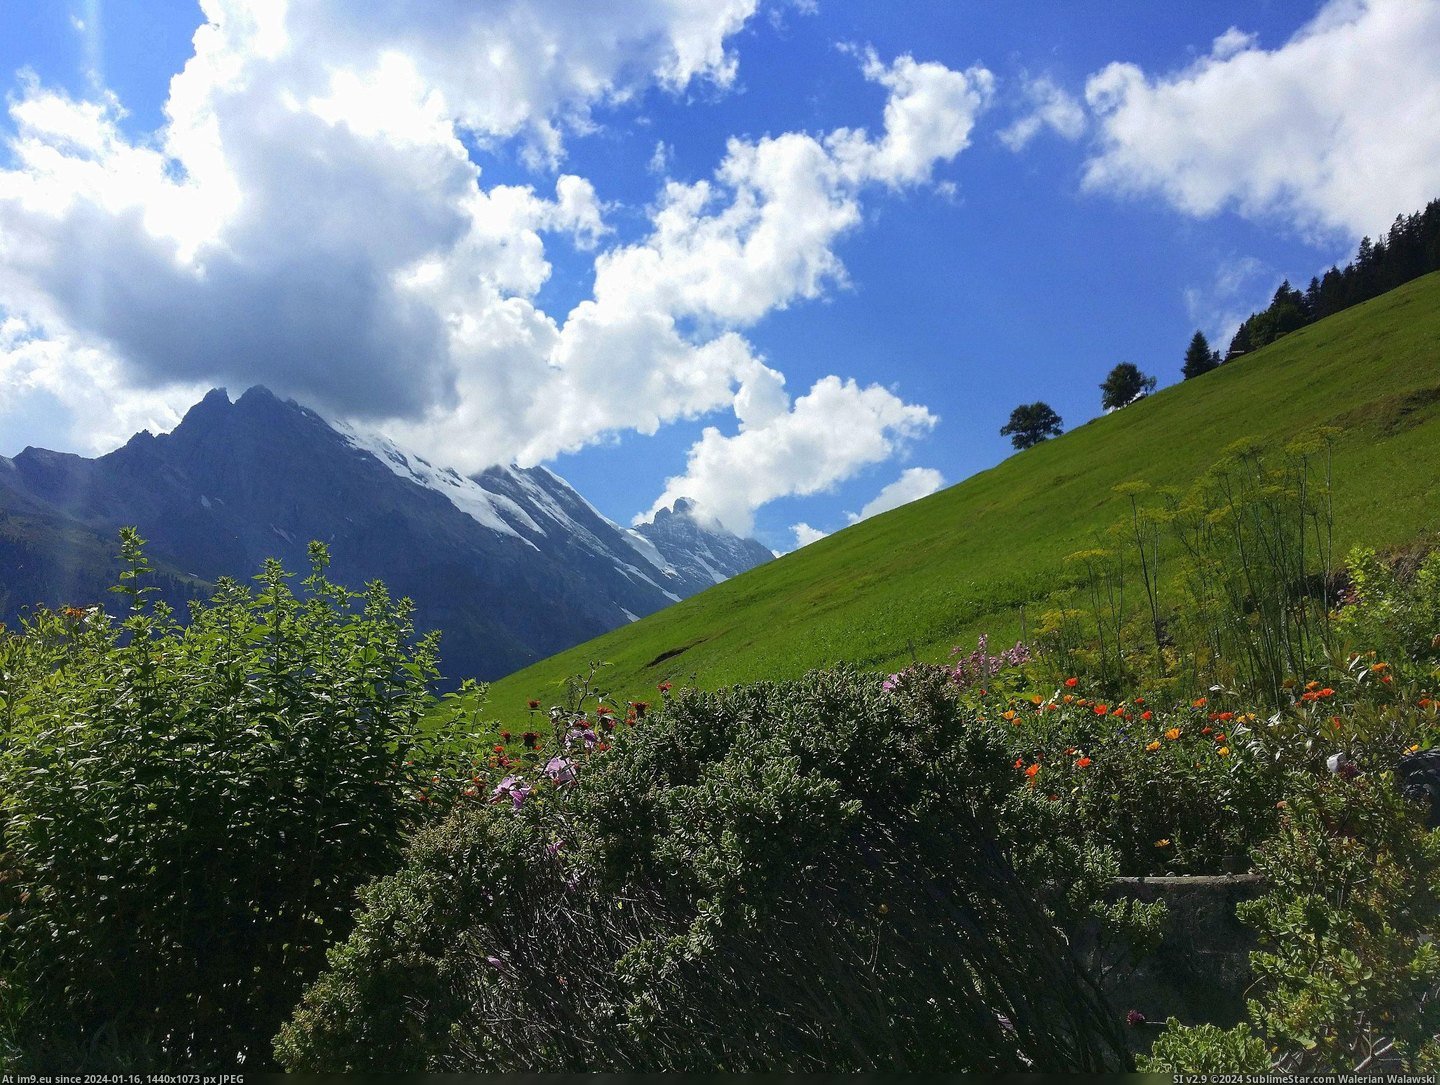 #Mountain #Switzerland #Gimmelwald #Hillside #Grassy [Earthporn] The grassy mountain hillside of Gimmelwald, Switzerland [OC] [2476 x 1857] Pic. (Image of album My r/EARTHPORN favs))